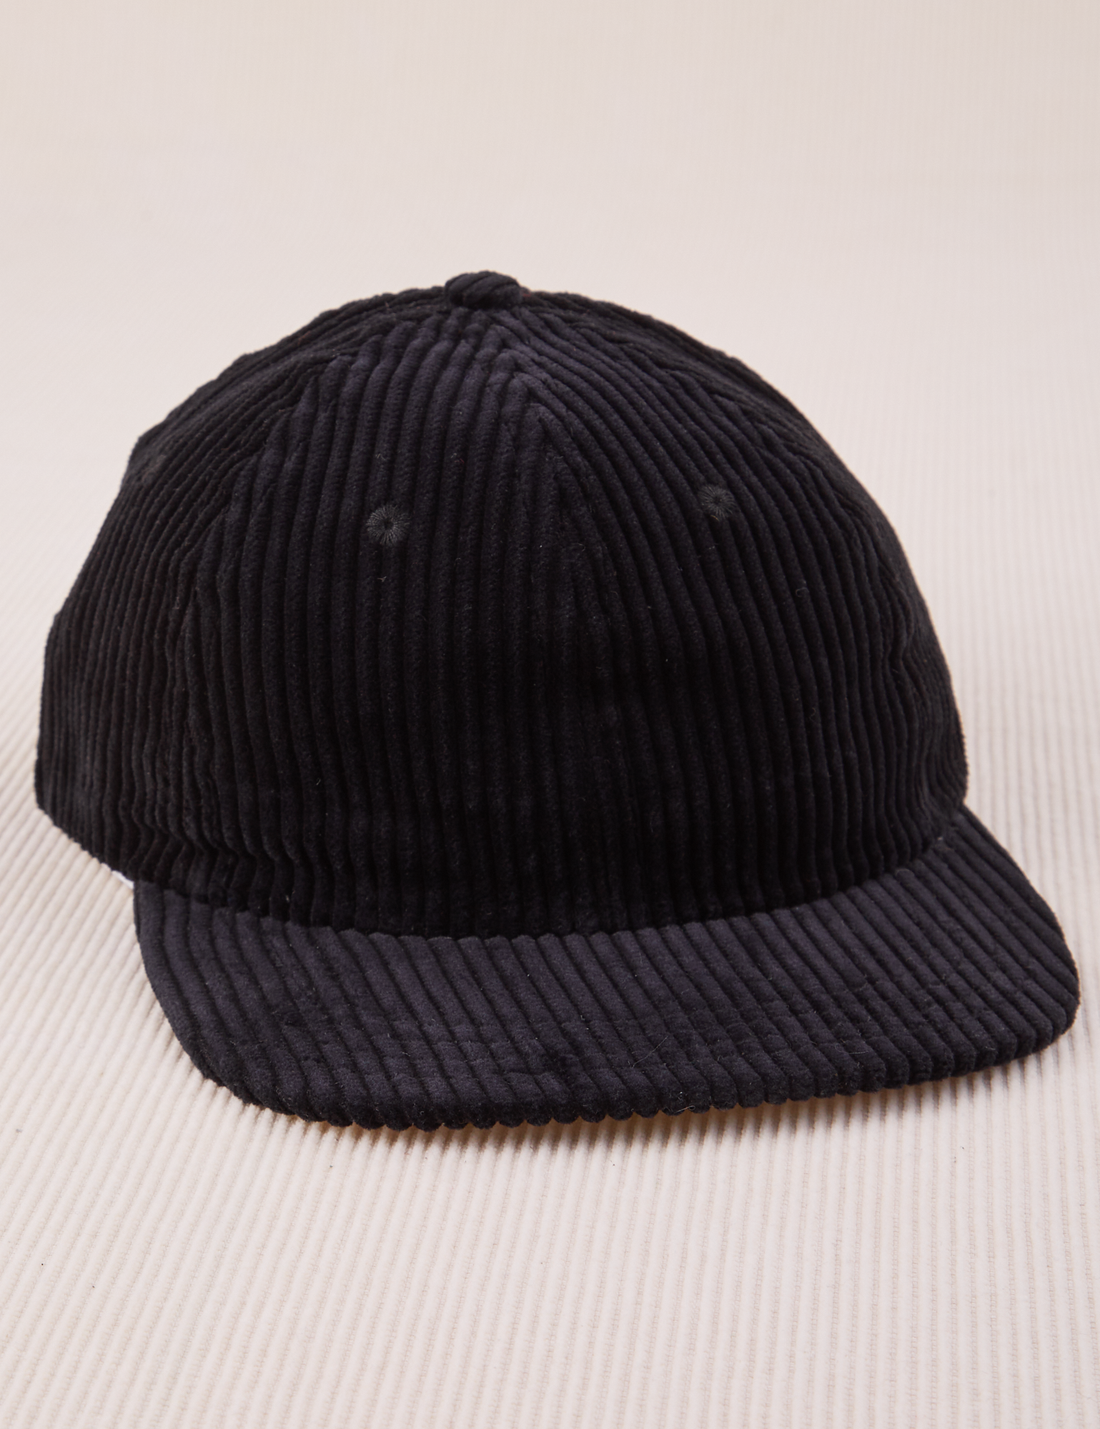 Dugout Corduroy Hat in Basic Black